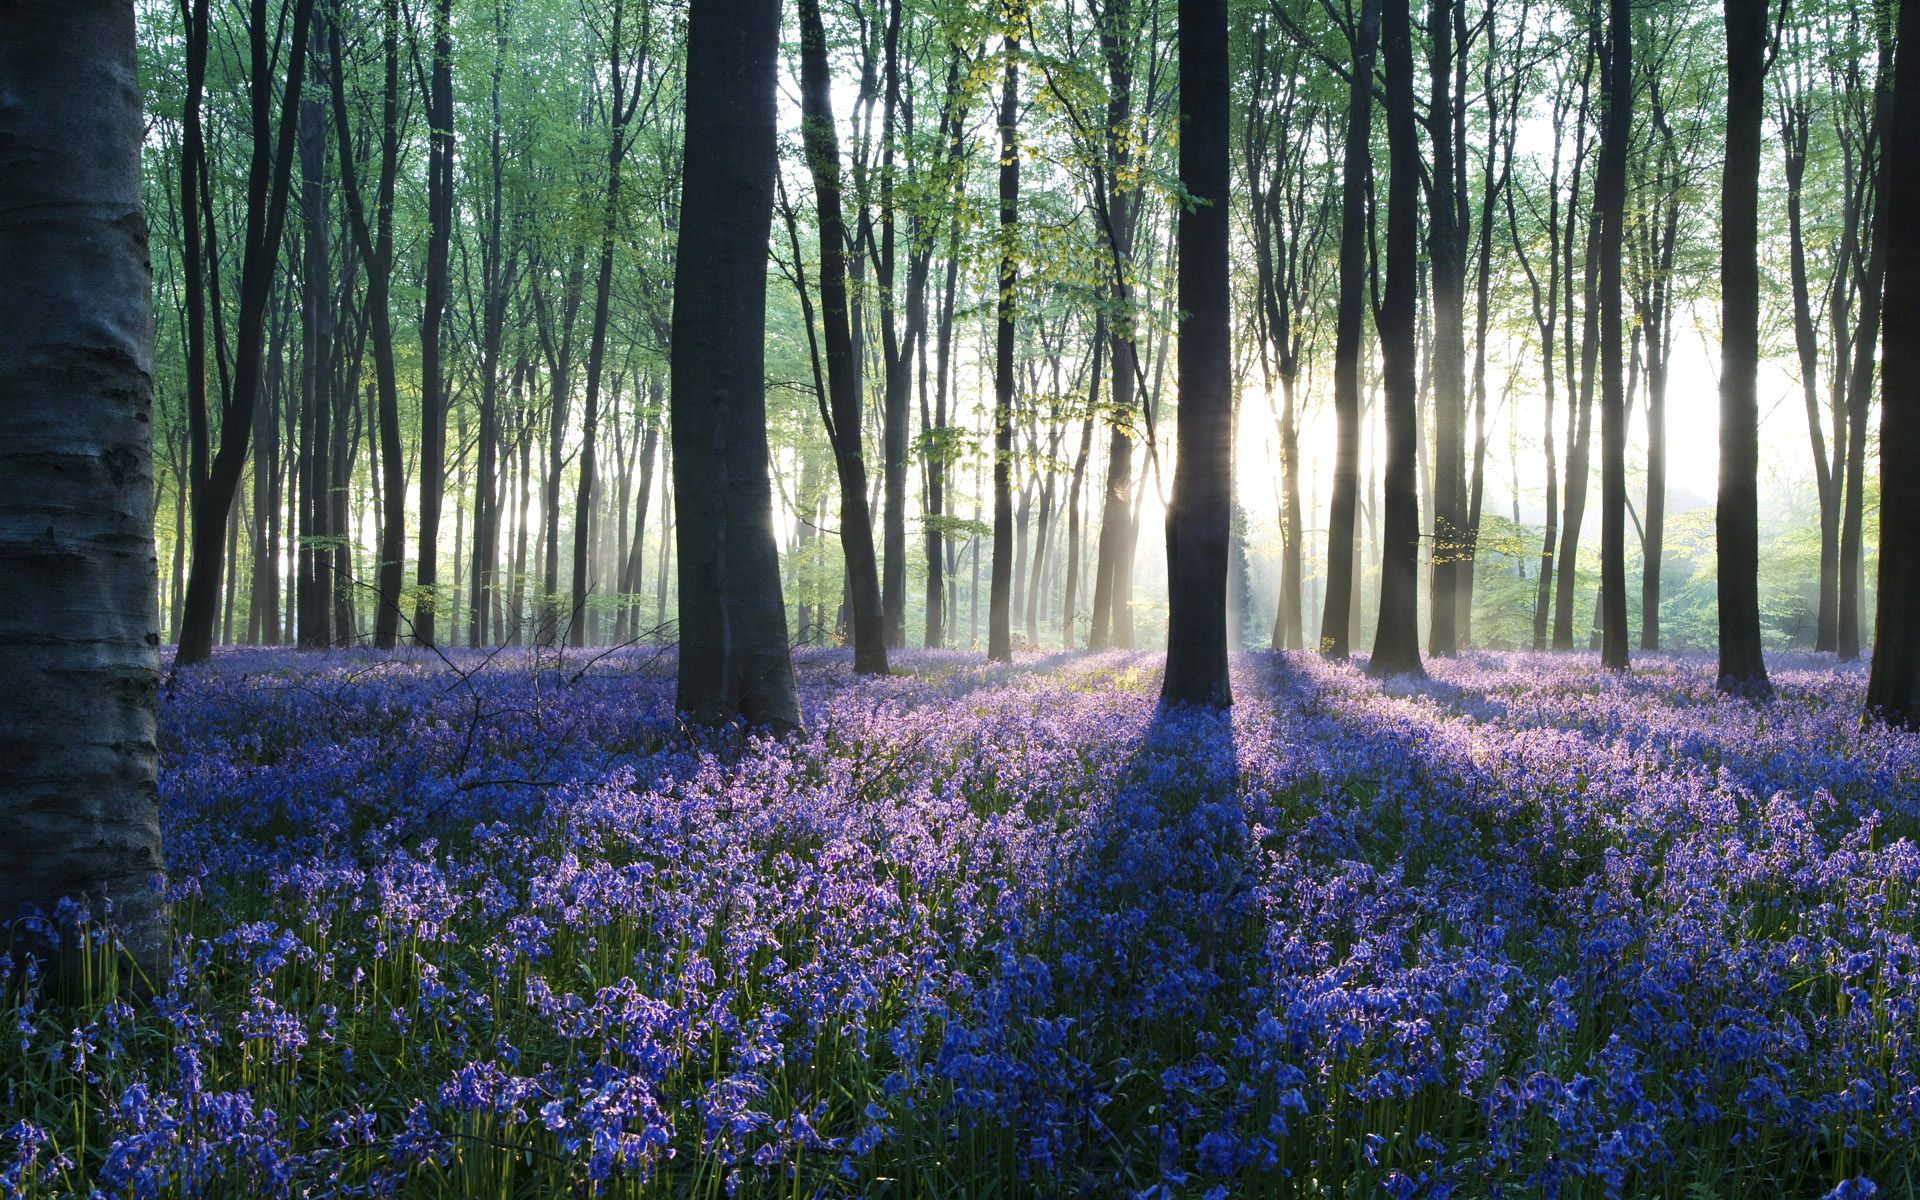 Purple flowers in a forest | Flowers | Pinterest | Forest wallpaper ...